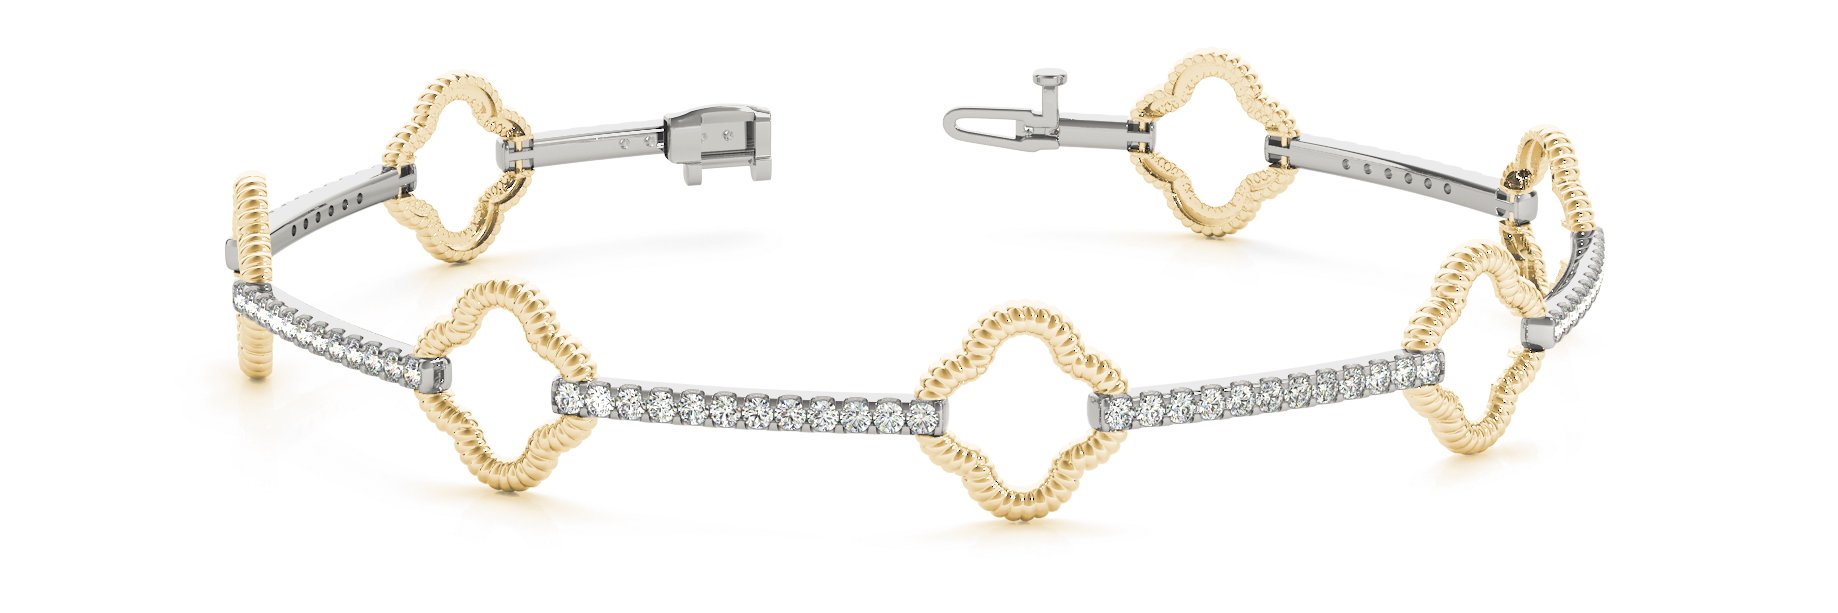 Fancy Diamond Bracelet Ladies 1.09ct tw - 14kt Yellow Gold